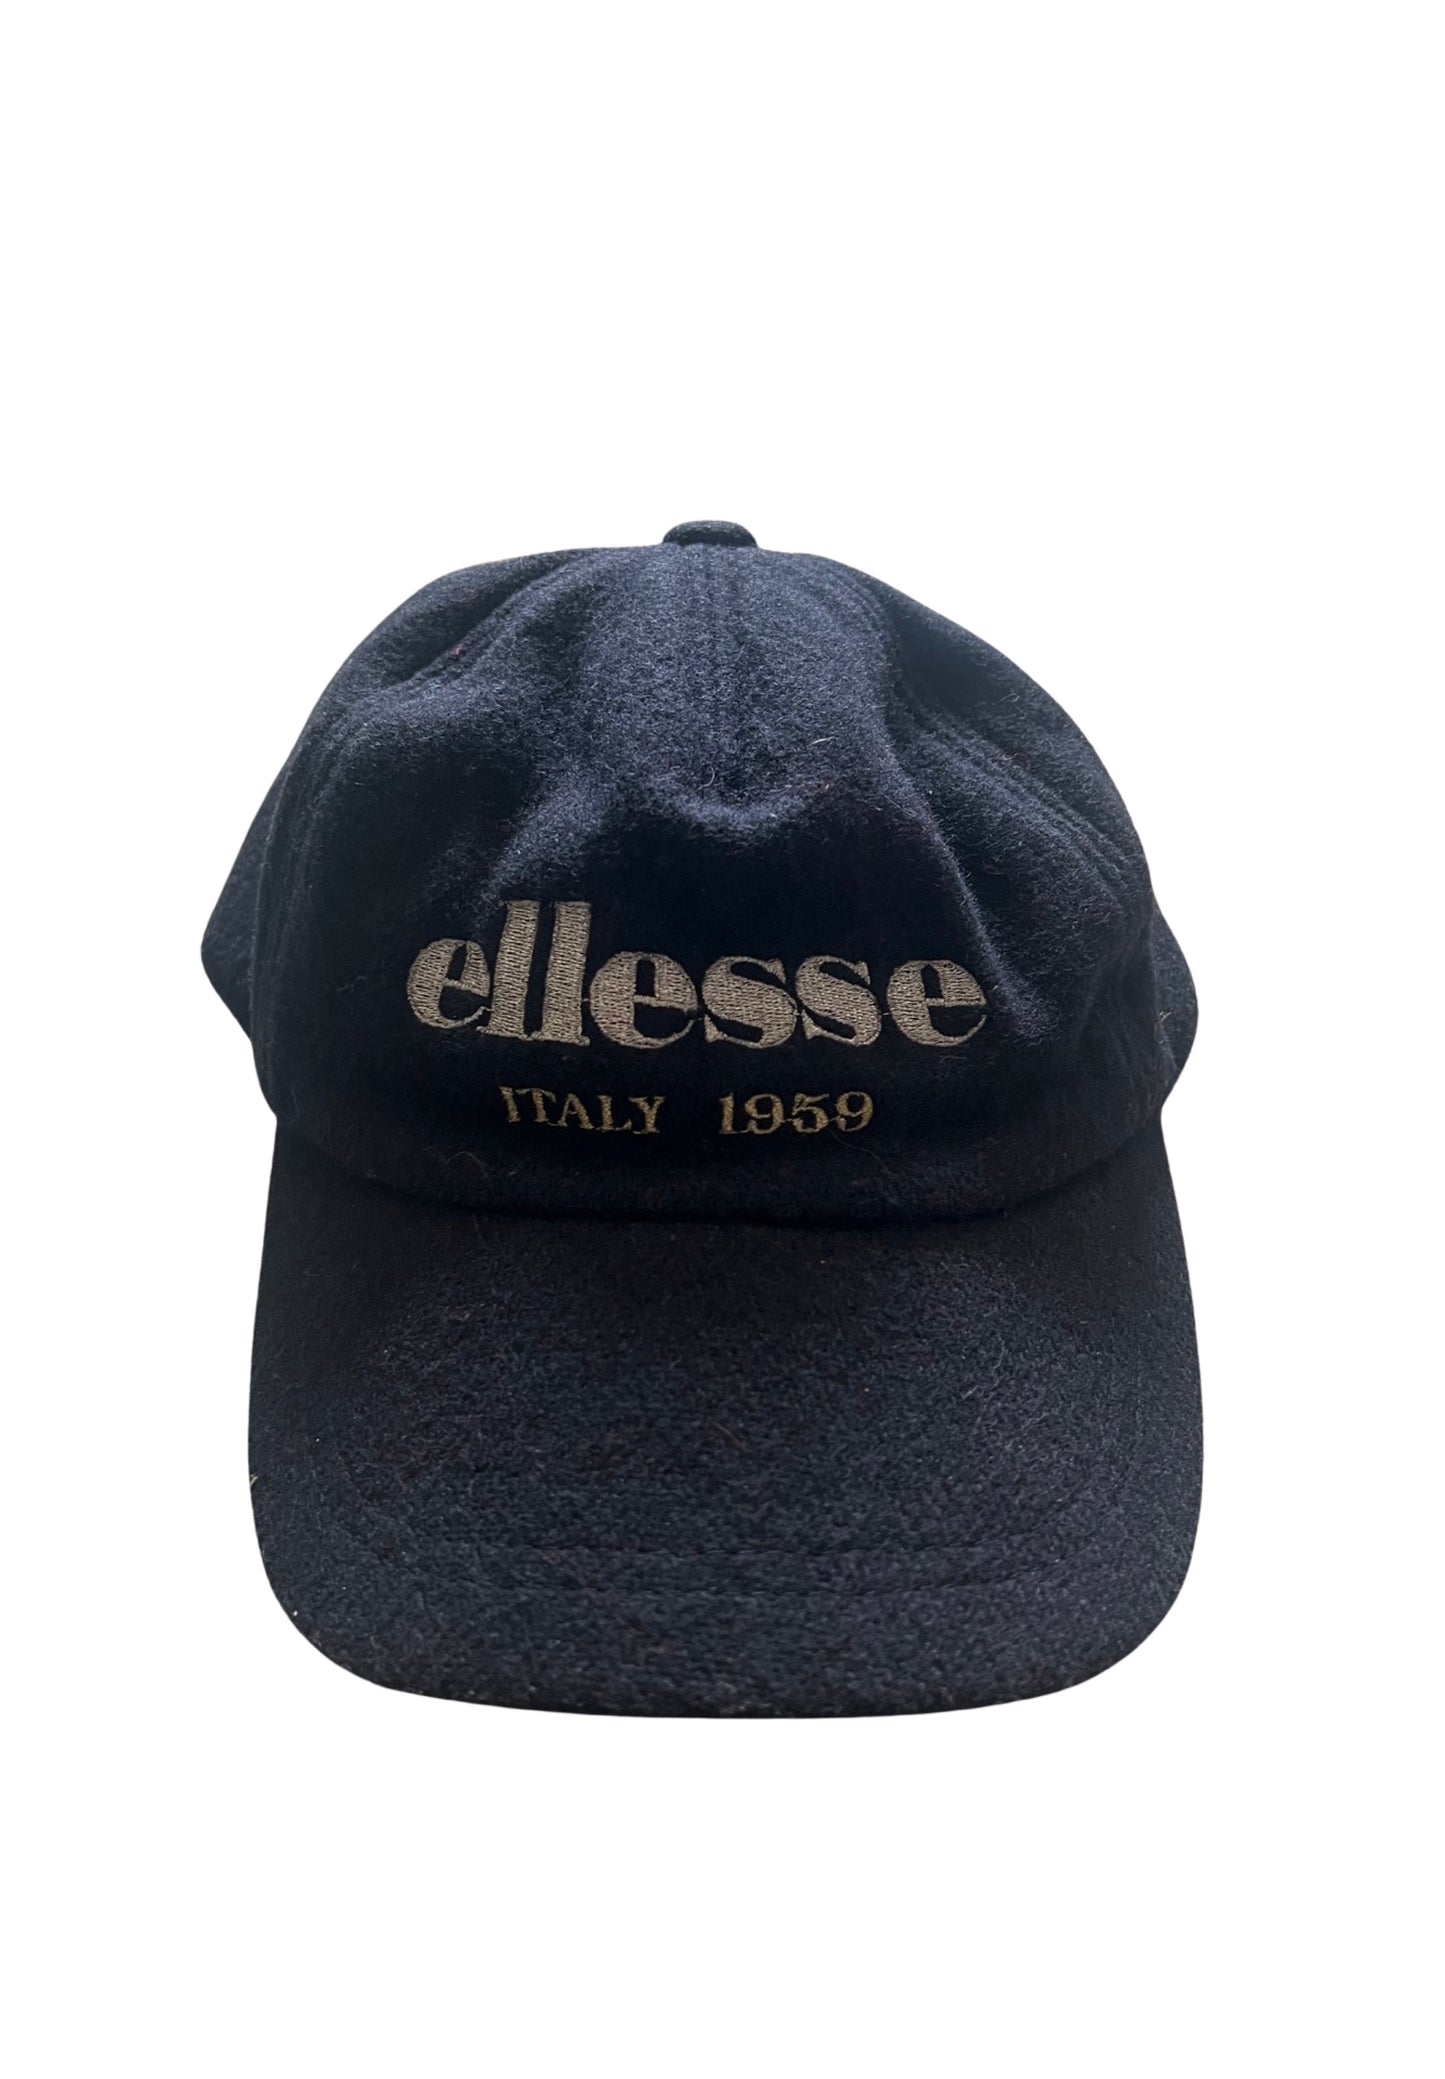 Vintage Ellesse Adjustable Wool Hat (circa 1980s)